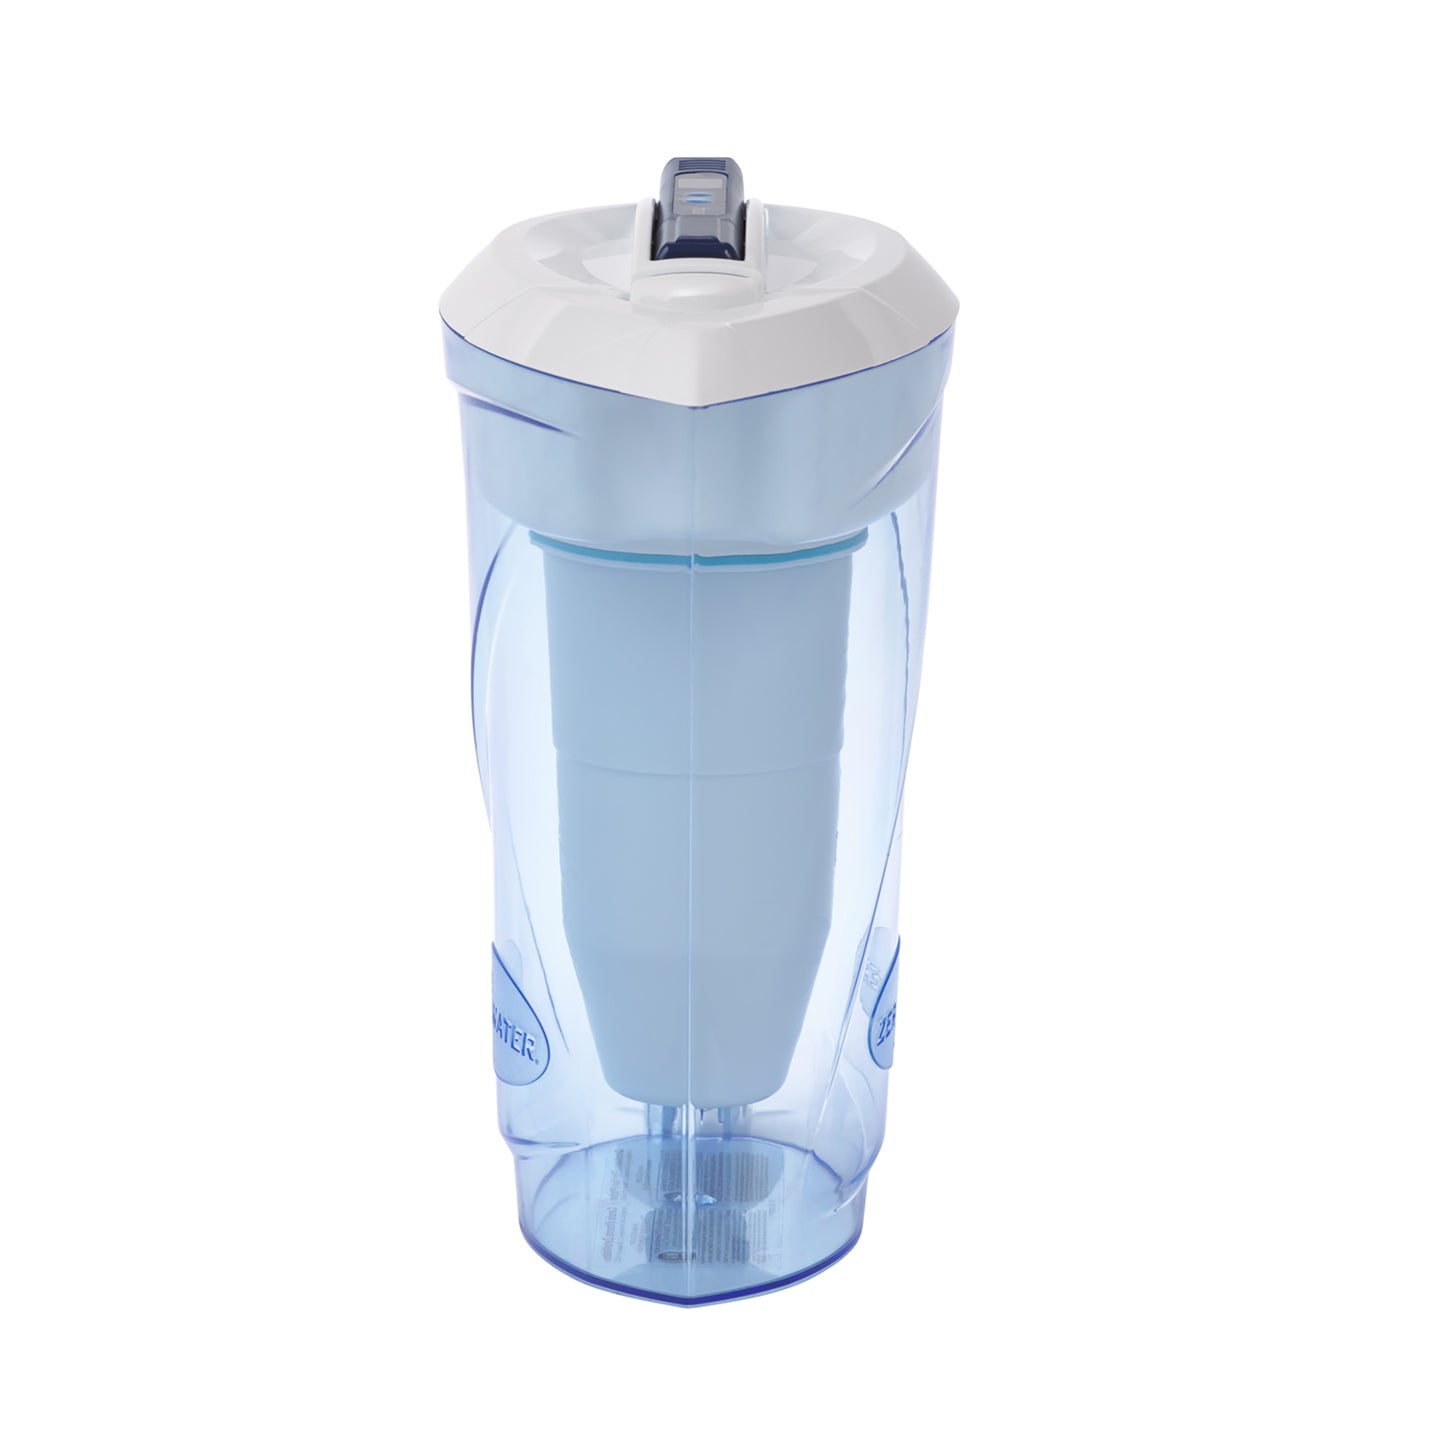 Dzbanek na wodę o pojemności 2,4 litra | Dzbanek na 10 filiżanek (2,4 litra)